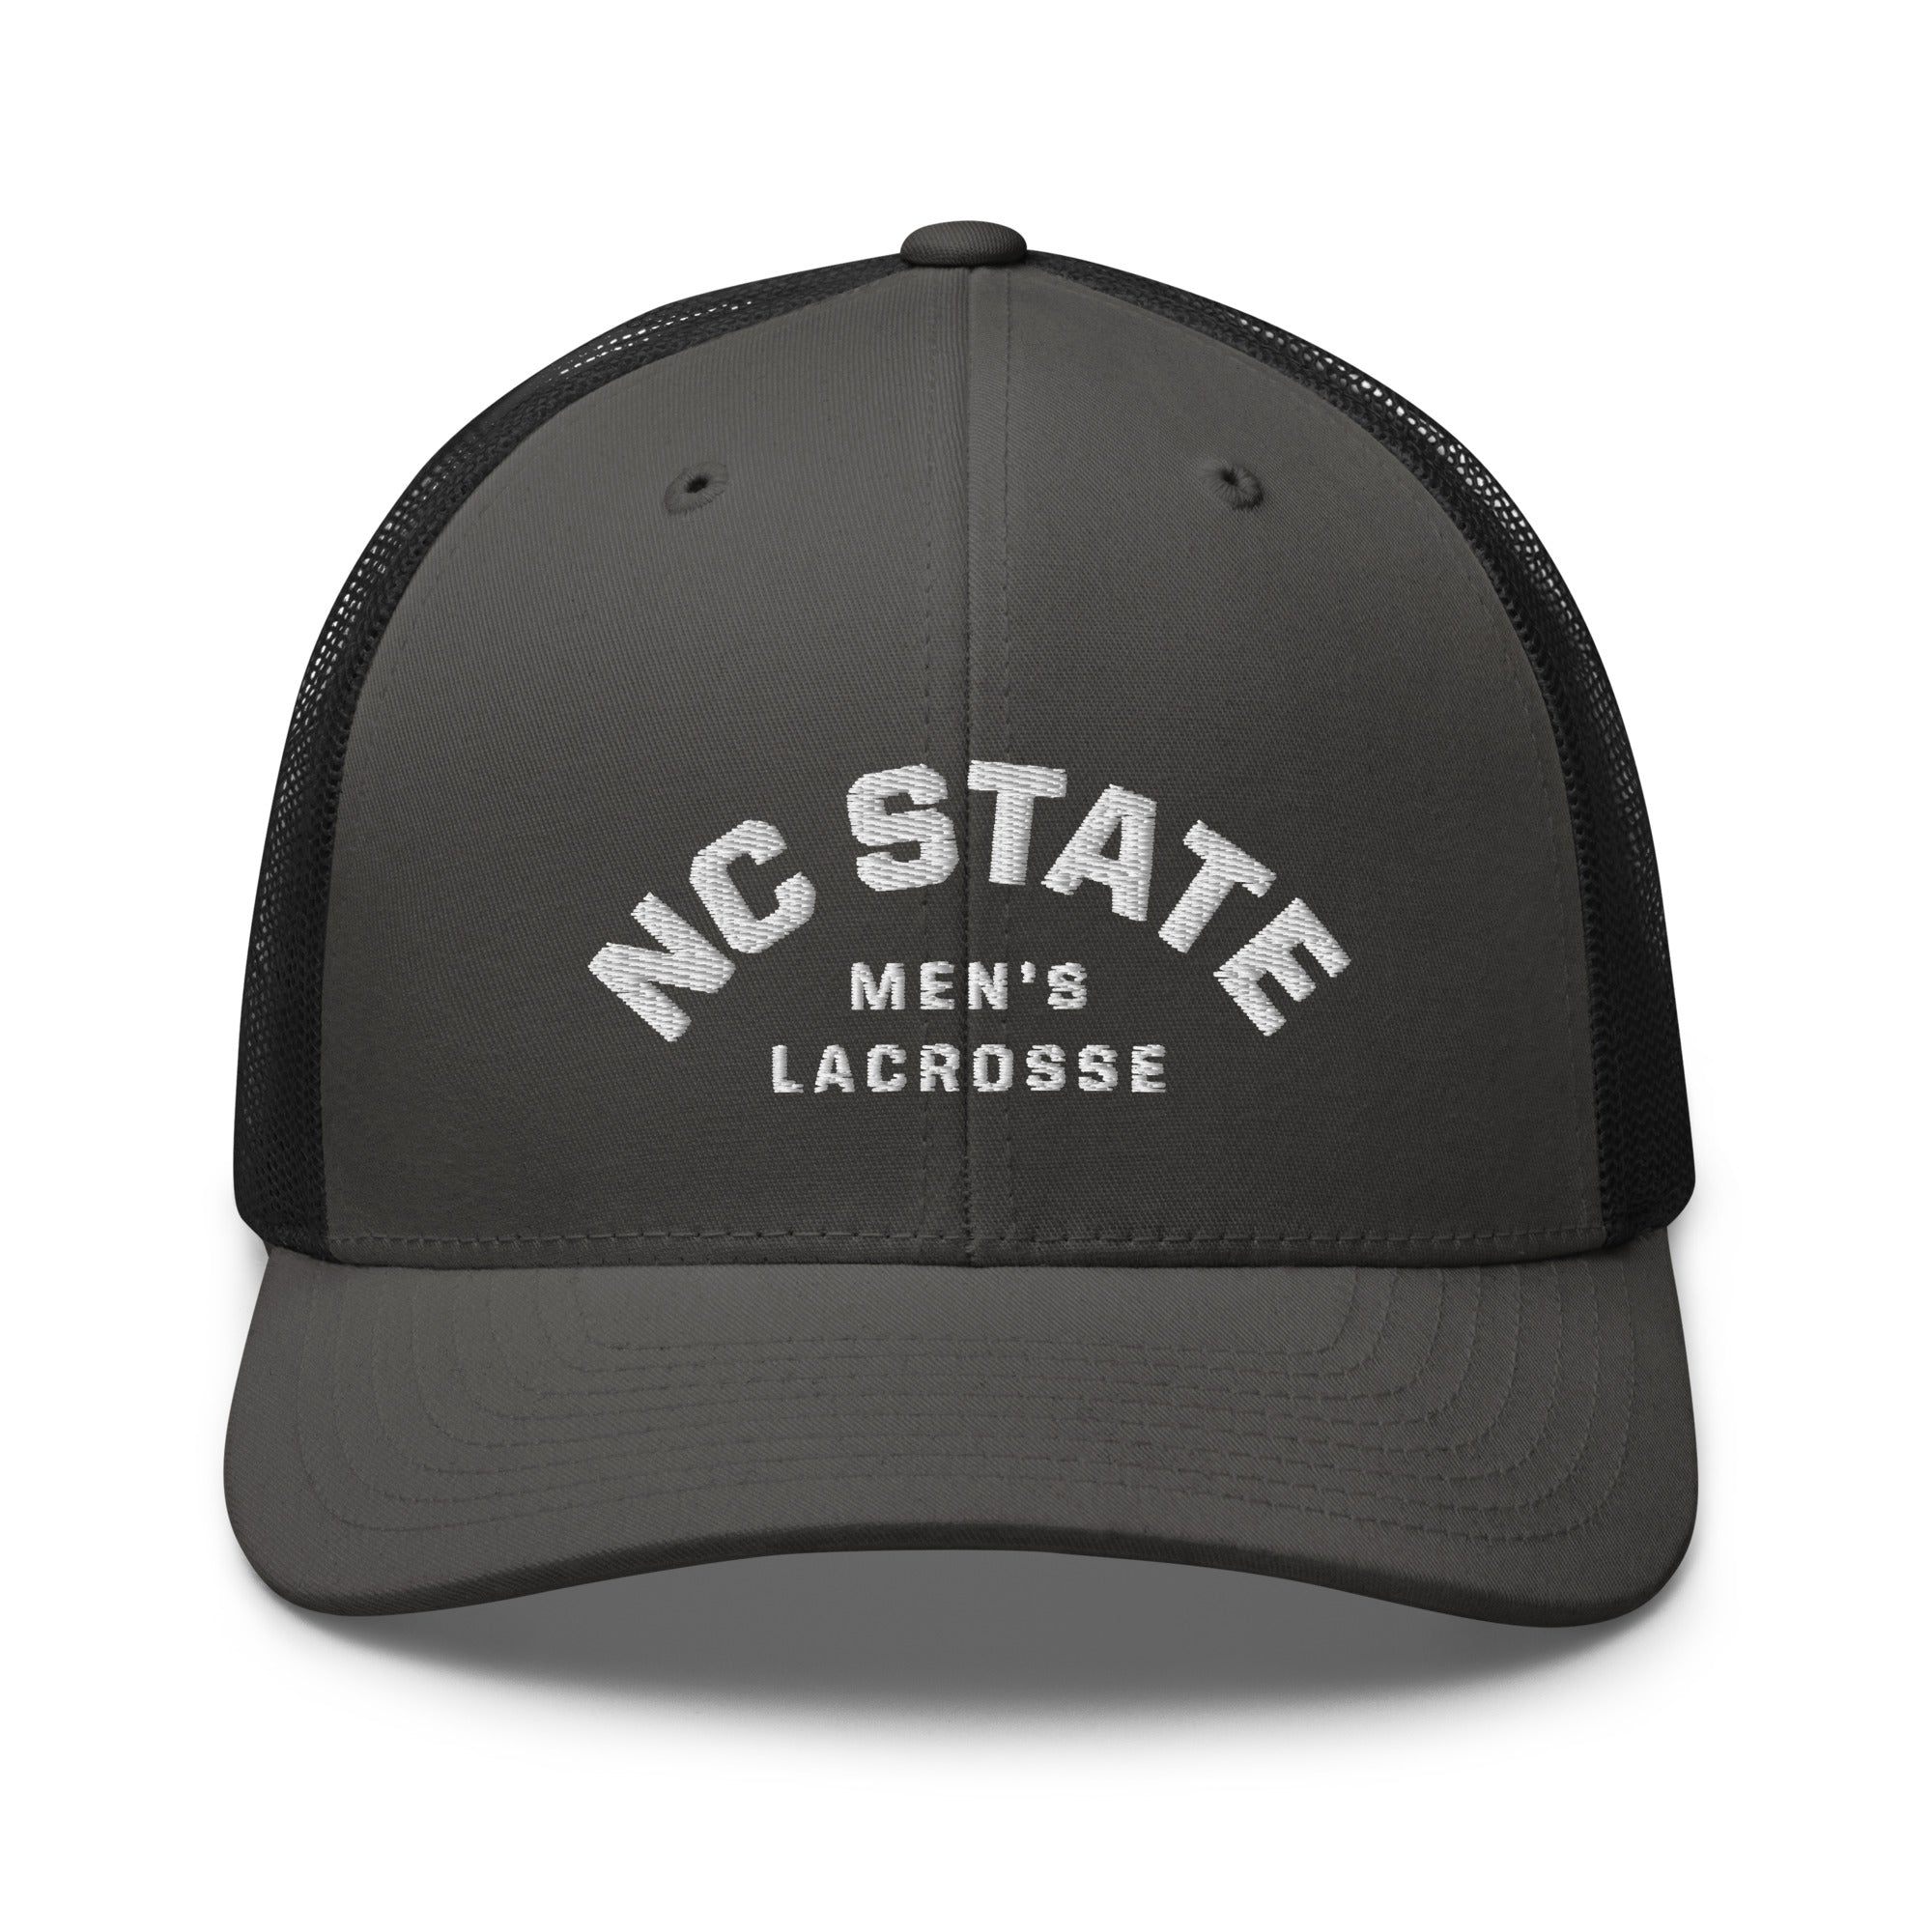 NC State Trucker Cap